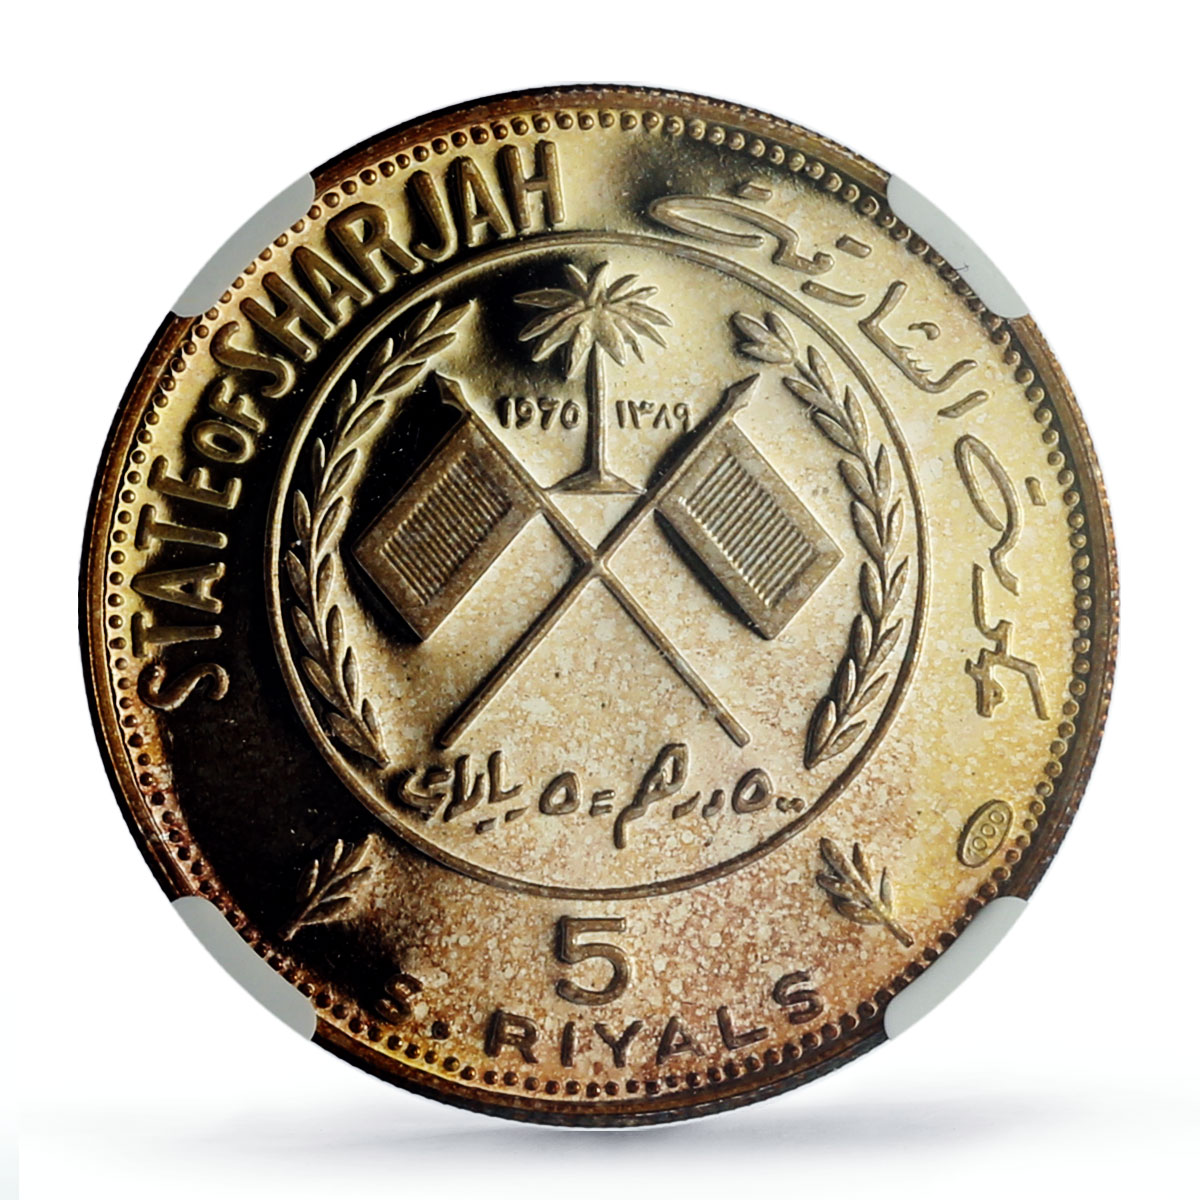 Sharjah Emirate 5 riyals Napoleon 200th Birth Politics PF68 NGC silver coin 1970